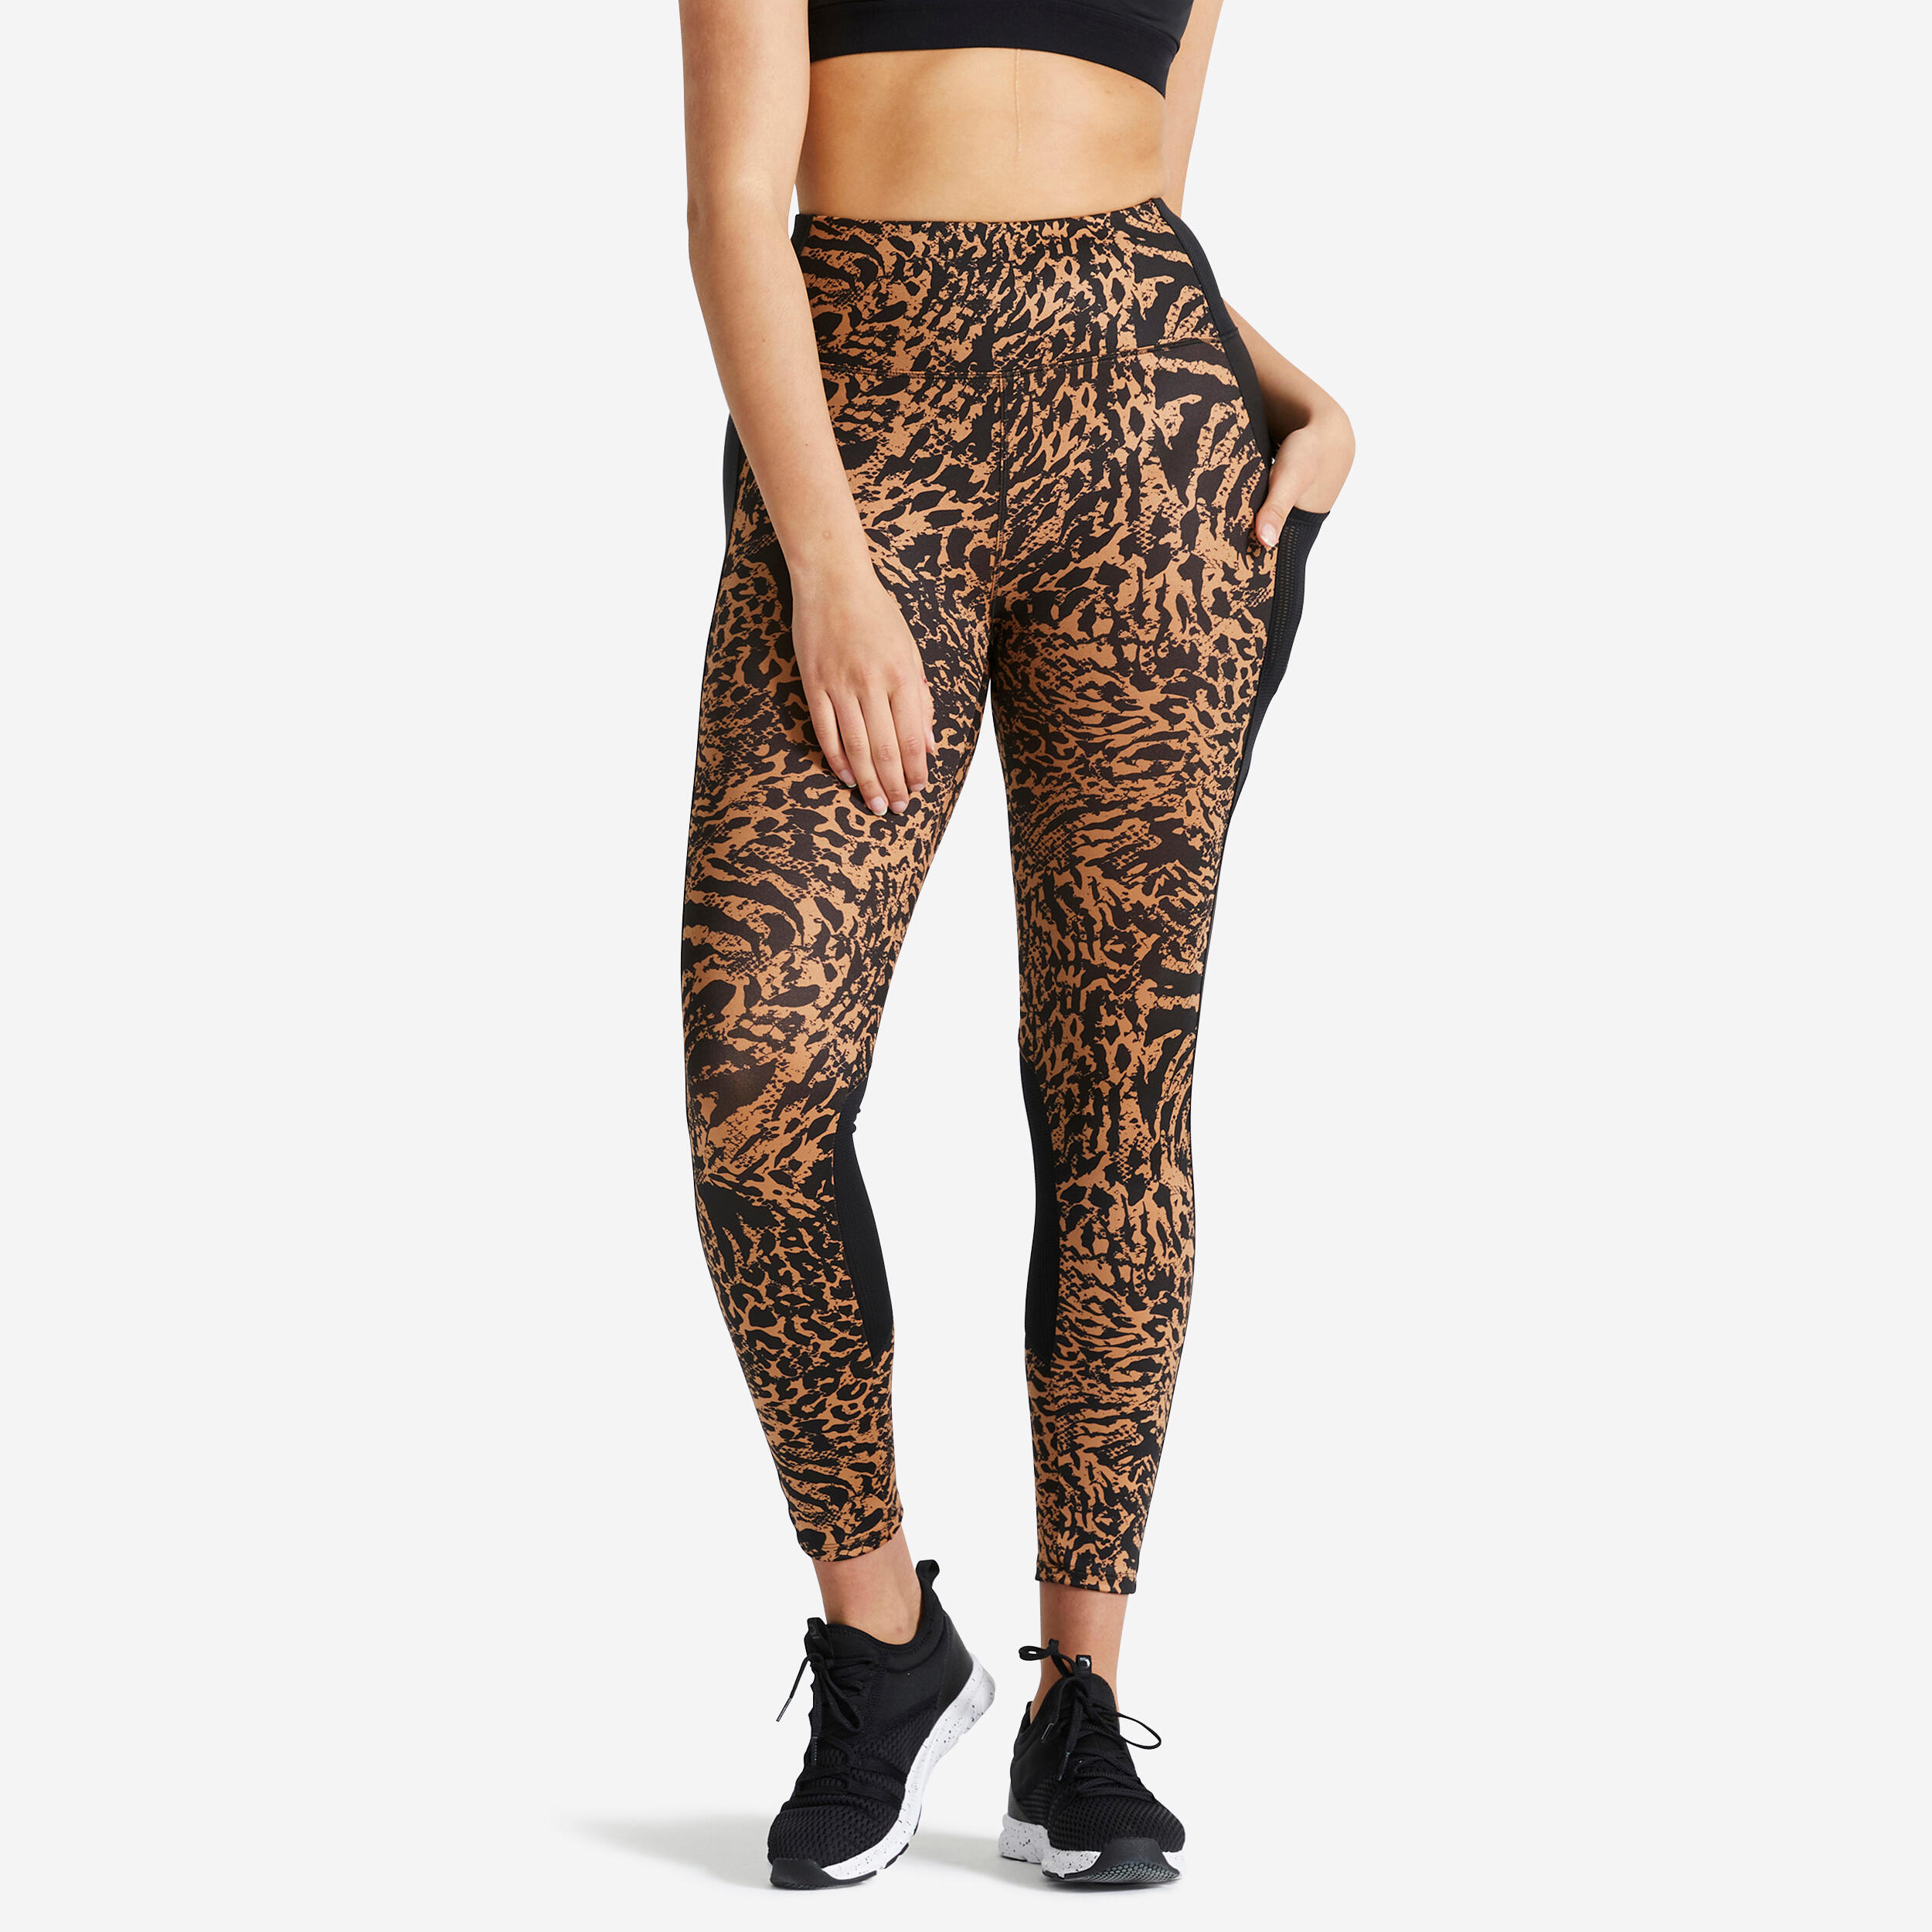 Women's Leggings Nike Animal Print Sportswear